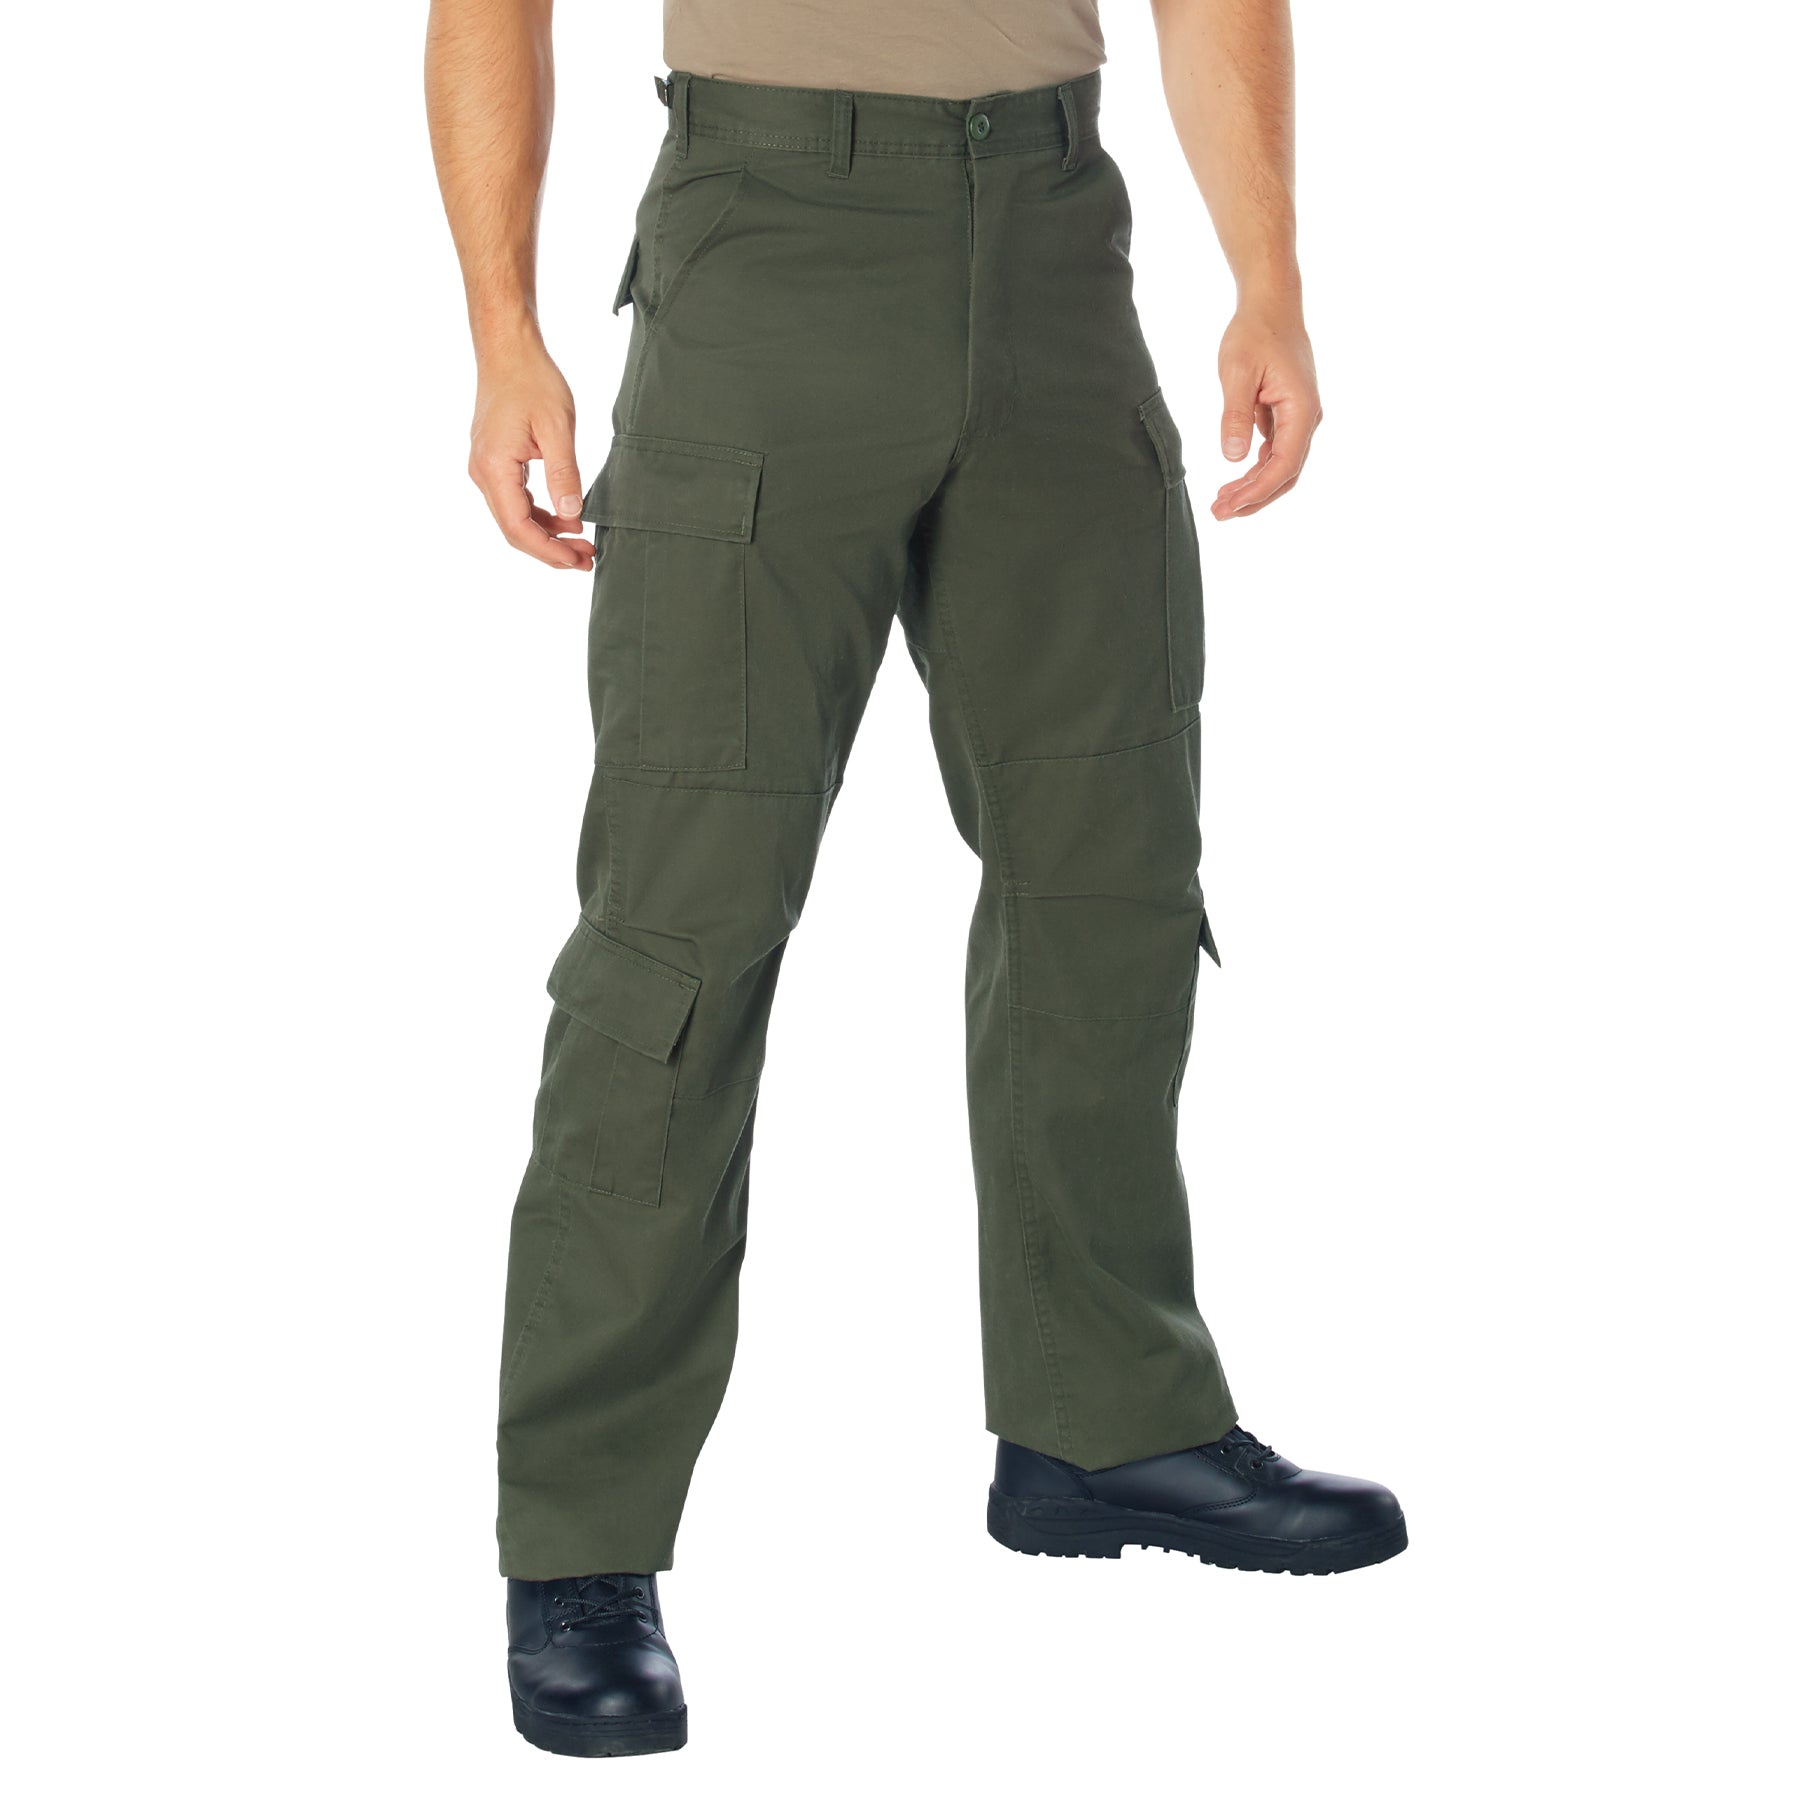 [Vintage Paratrooper] Poly/Cotton Cargo Fatigue BDU Pants Olive Drab